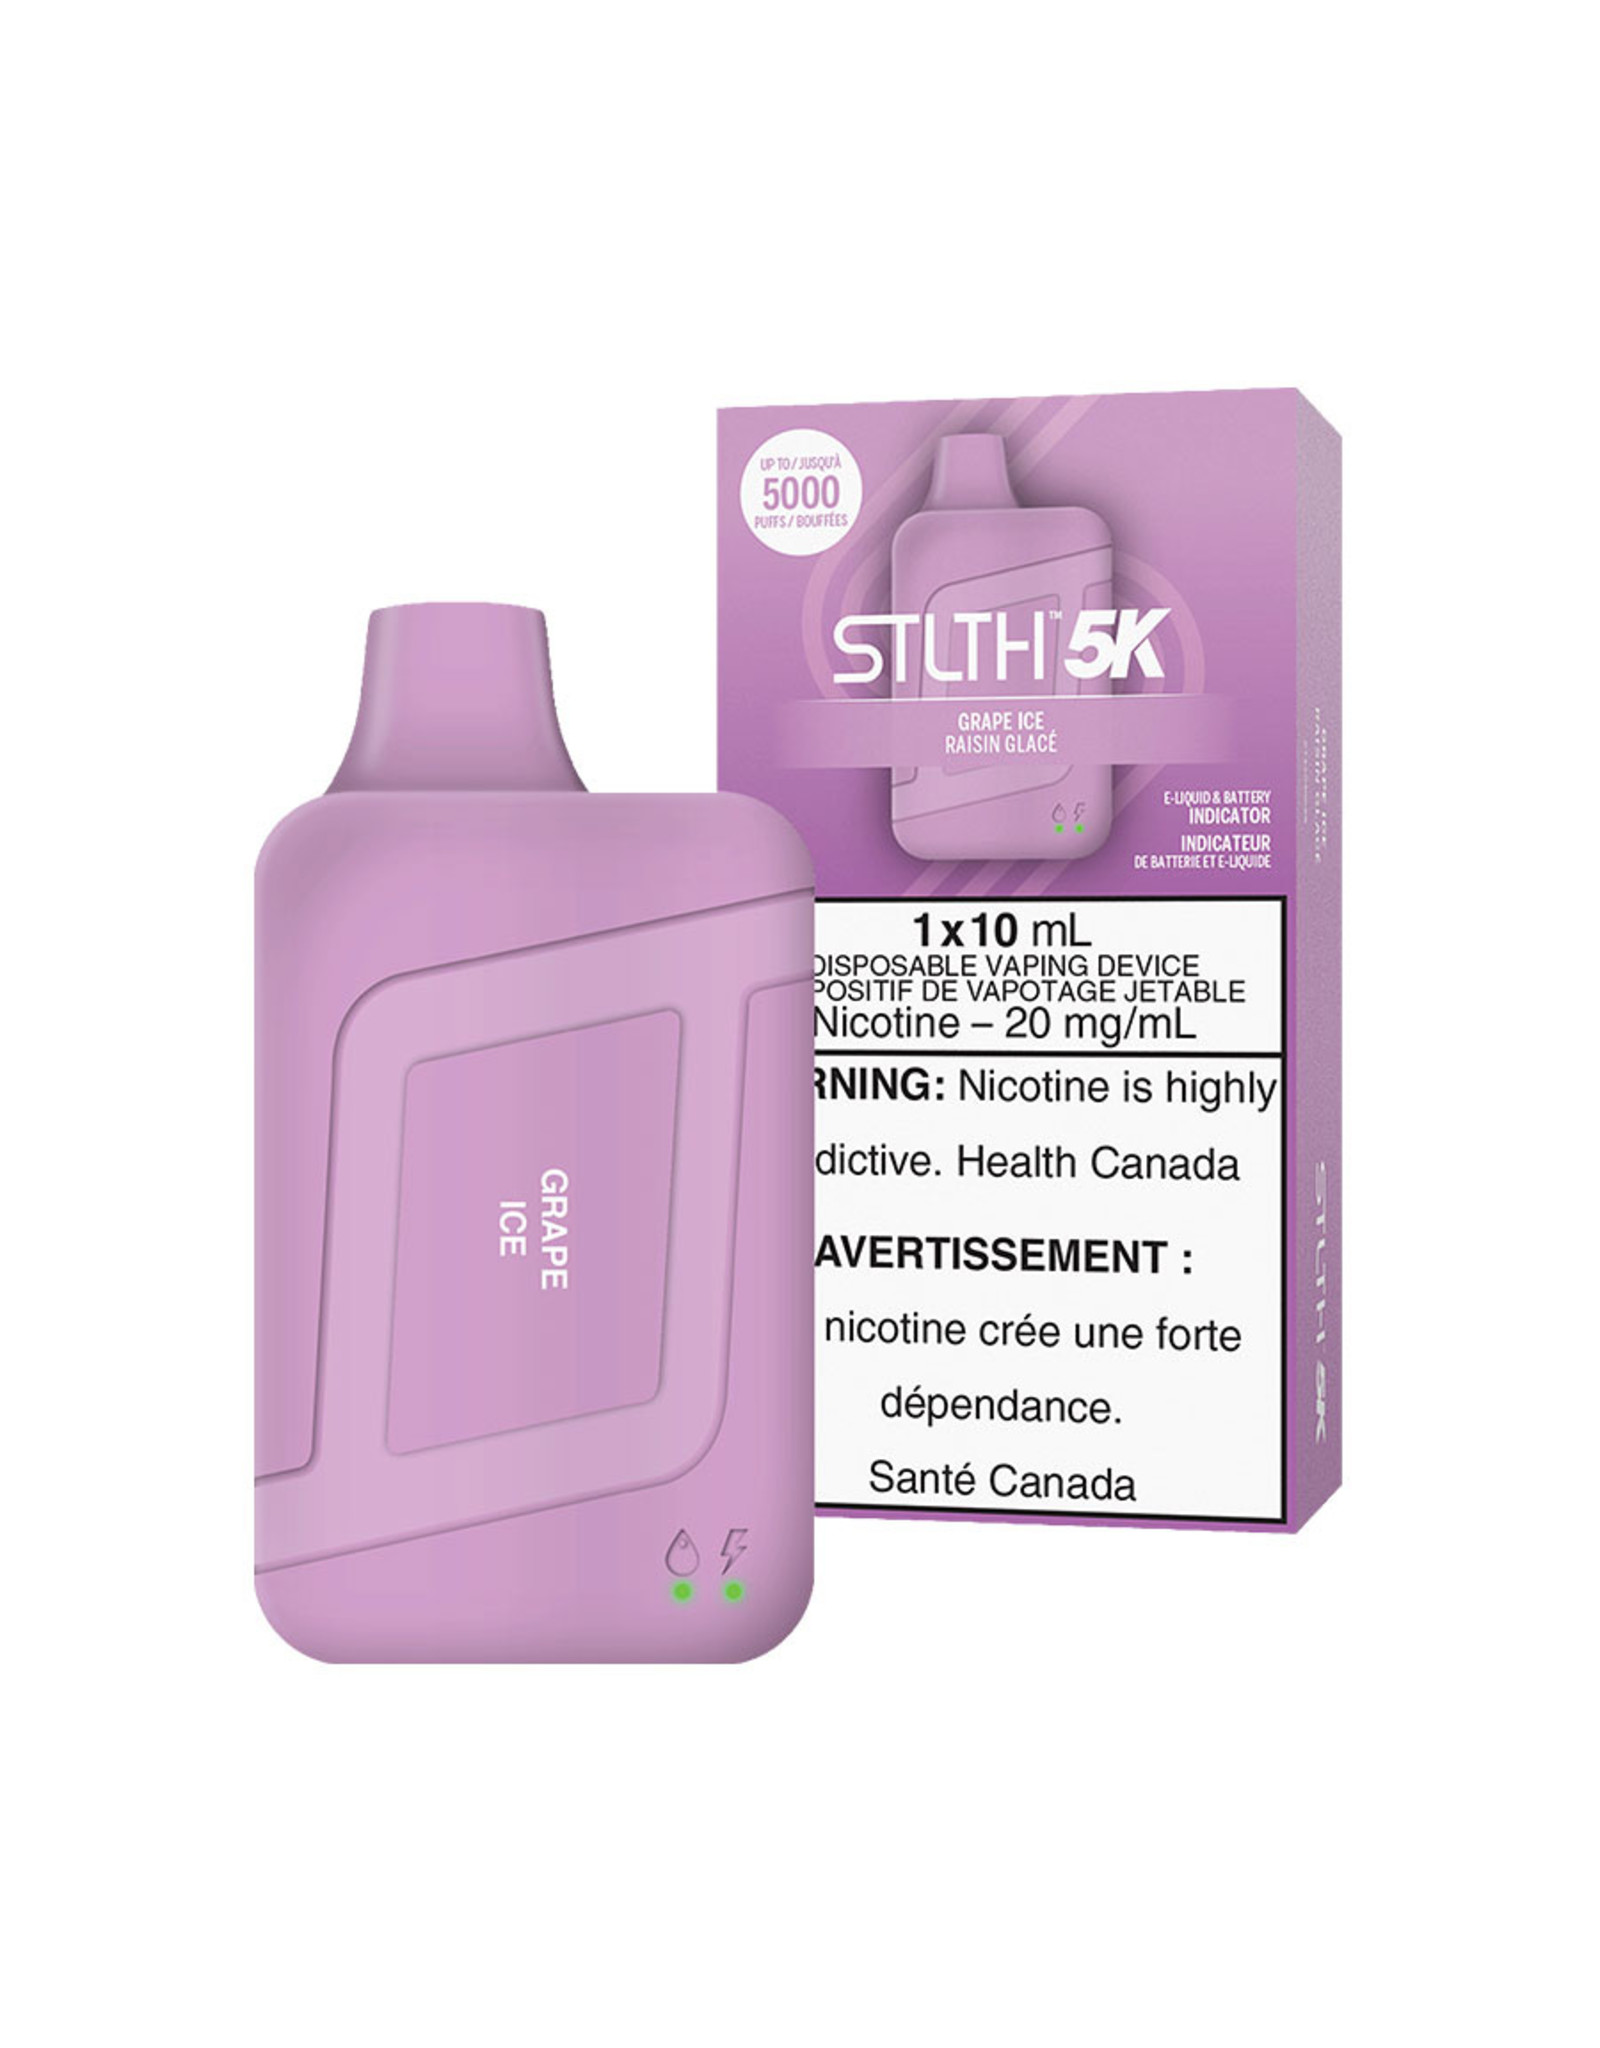 STLTH Stlth Box 5000 Disposable Device (10mL)